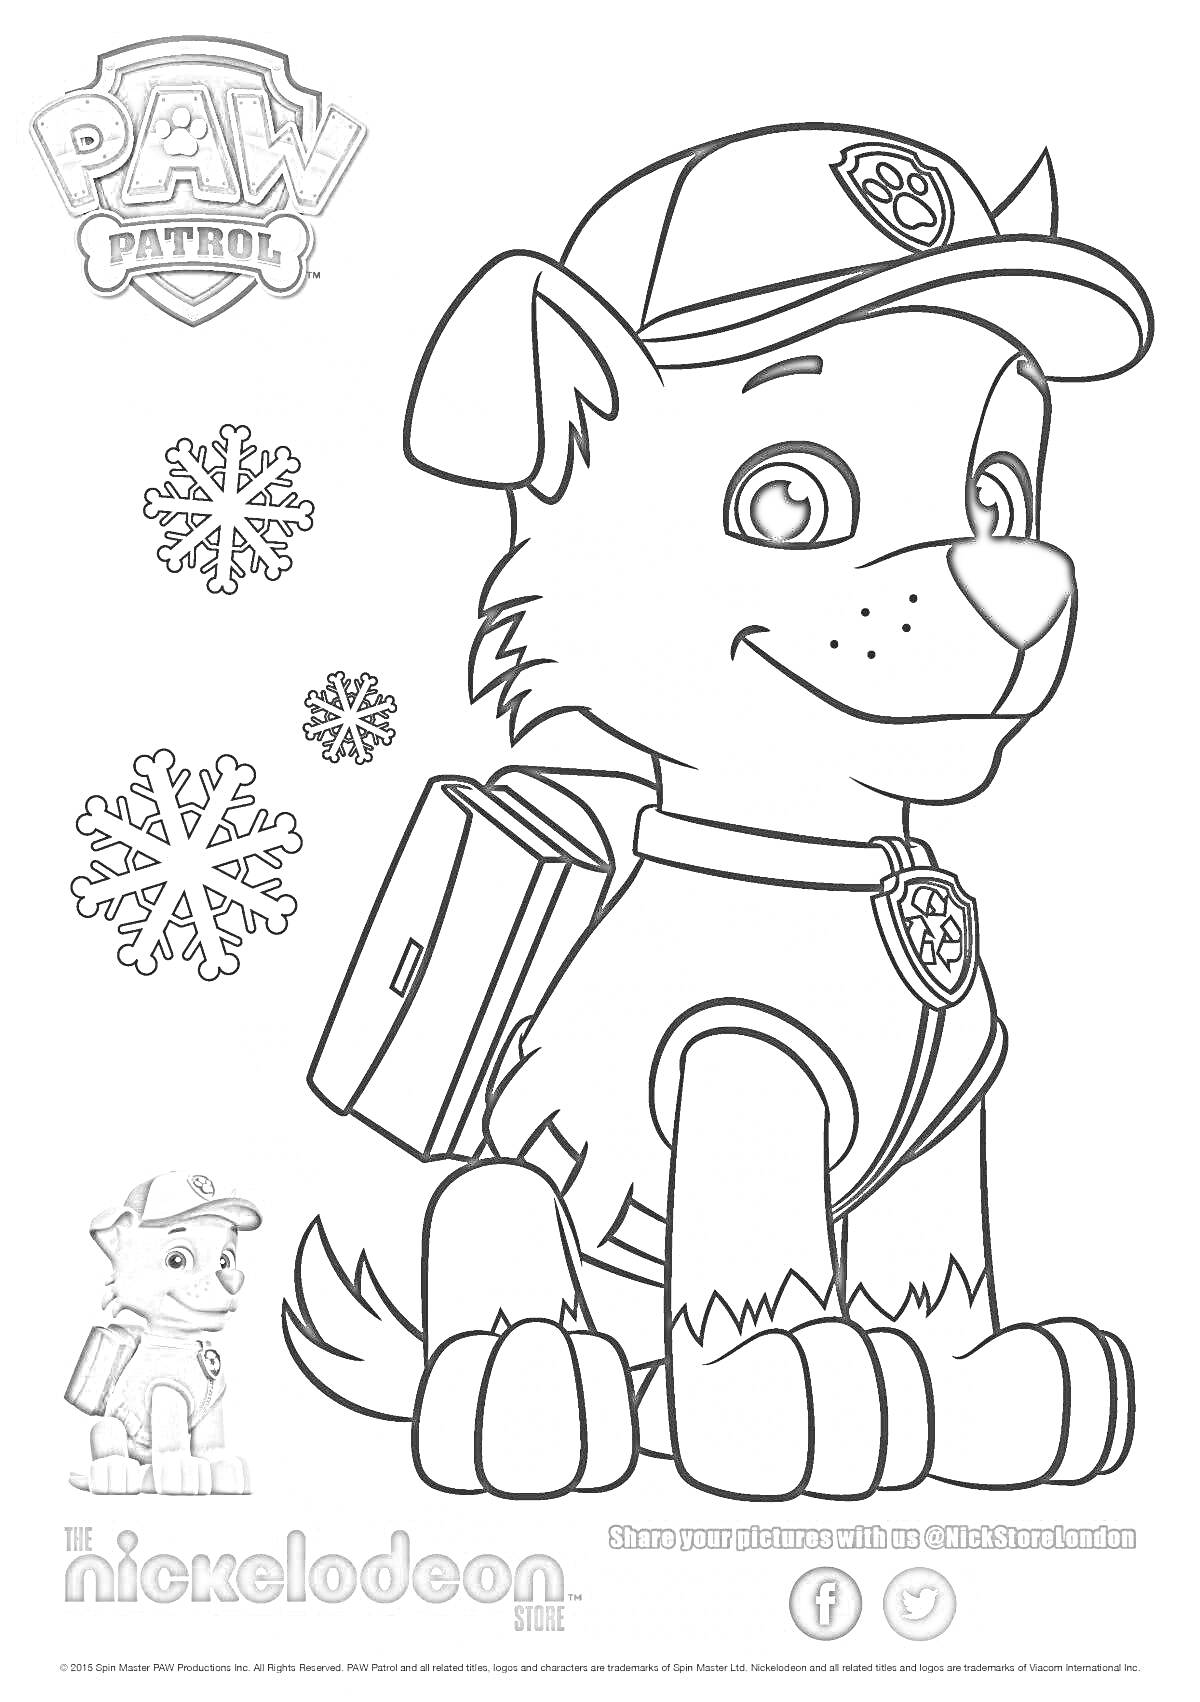 Щенок в кепке с эмблемой Paw Patrol, снежинки, логотип Paw Patrol, логотип Nickelodeon